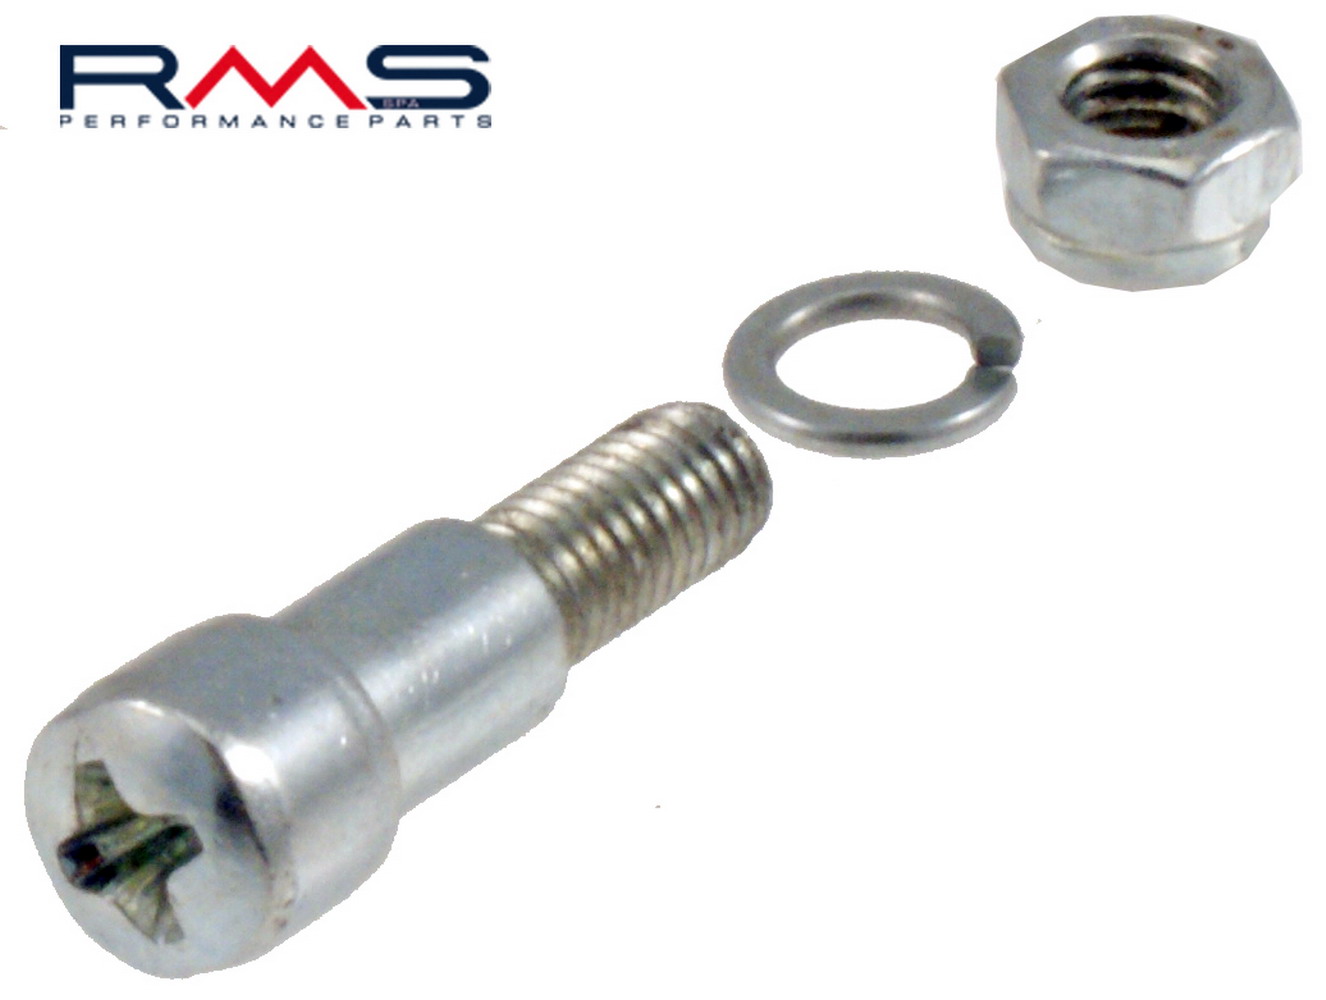 Obrázek produktu Lever securing screw RMS 121856120 (50 kusů) 121856120